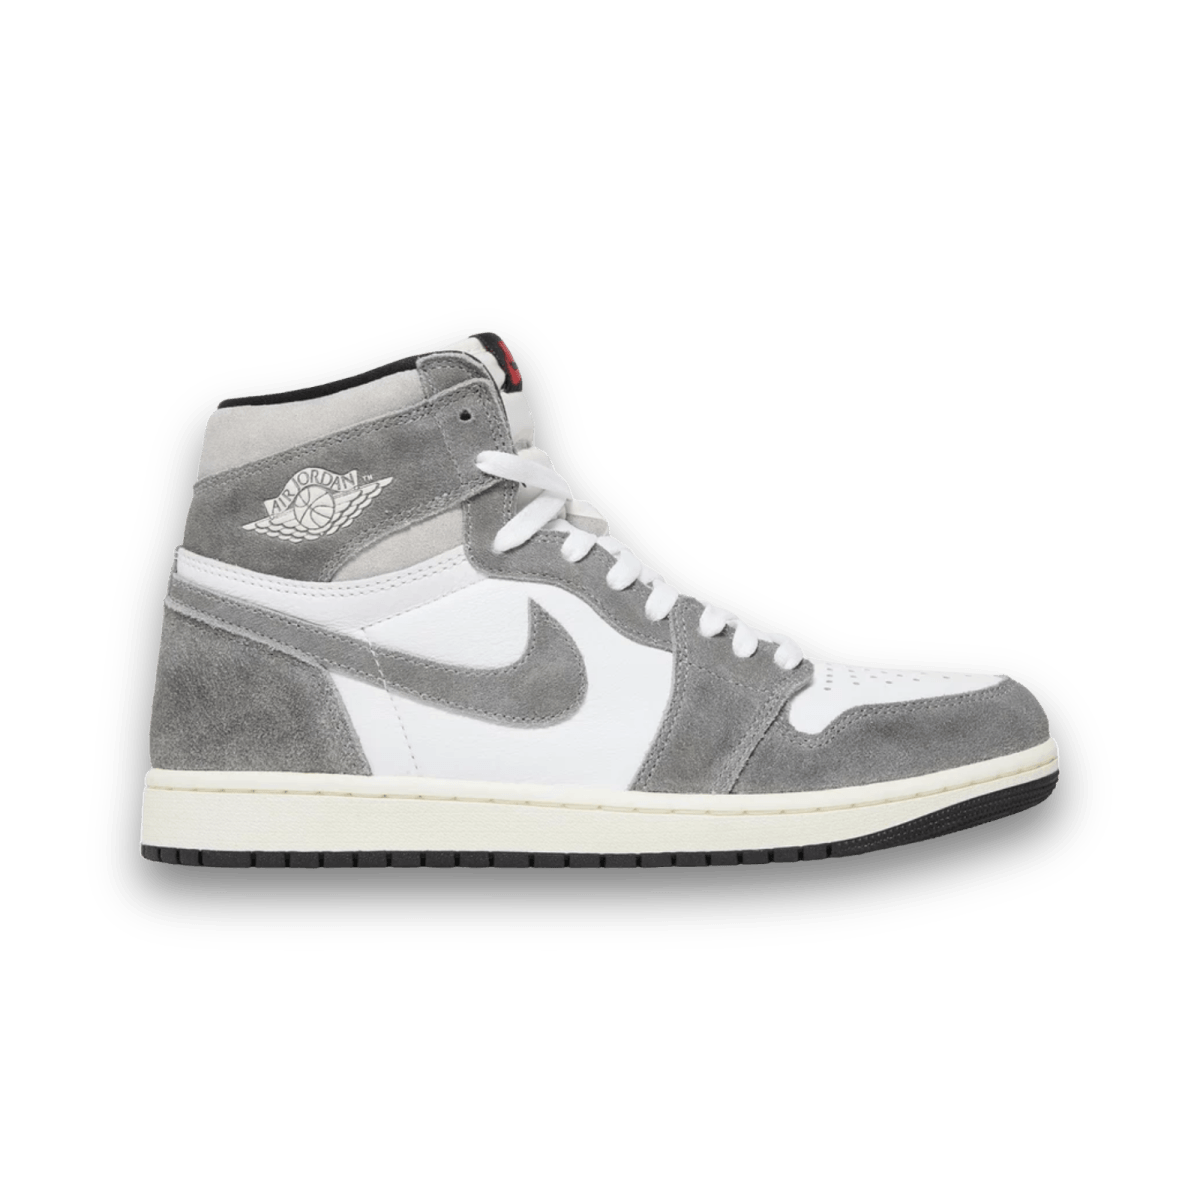 Air Jordan 1 Retro High OG 'Washed Black' - Grade School - High Sneaker - Jawns on Fire Sneakers & Streetwear